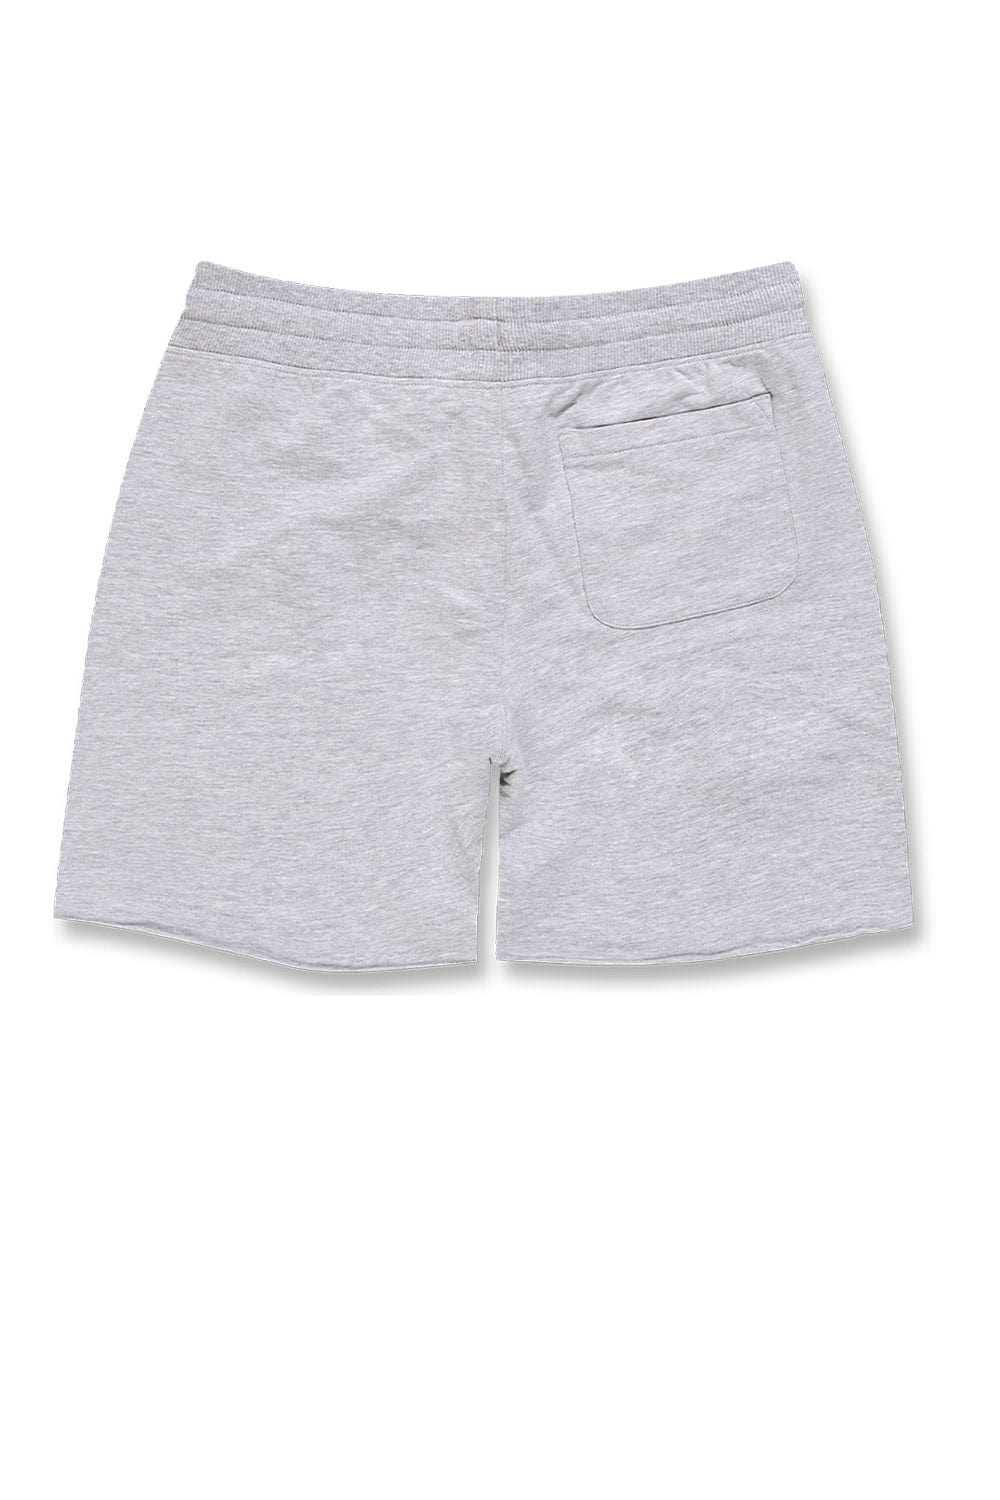 Athletic - Summer Breeze Knit Shorts